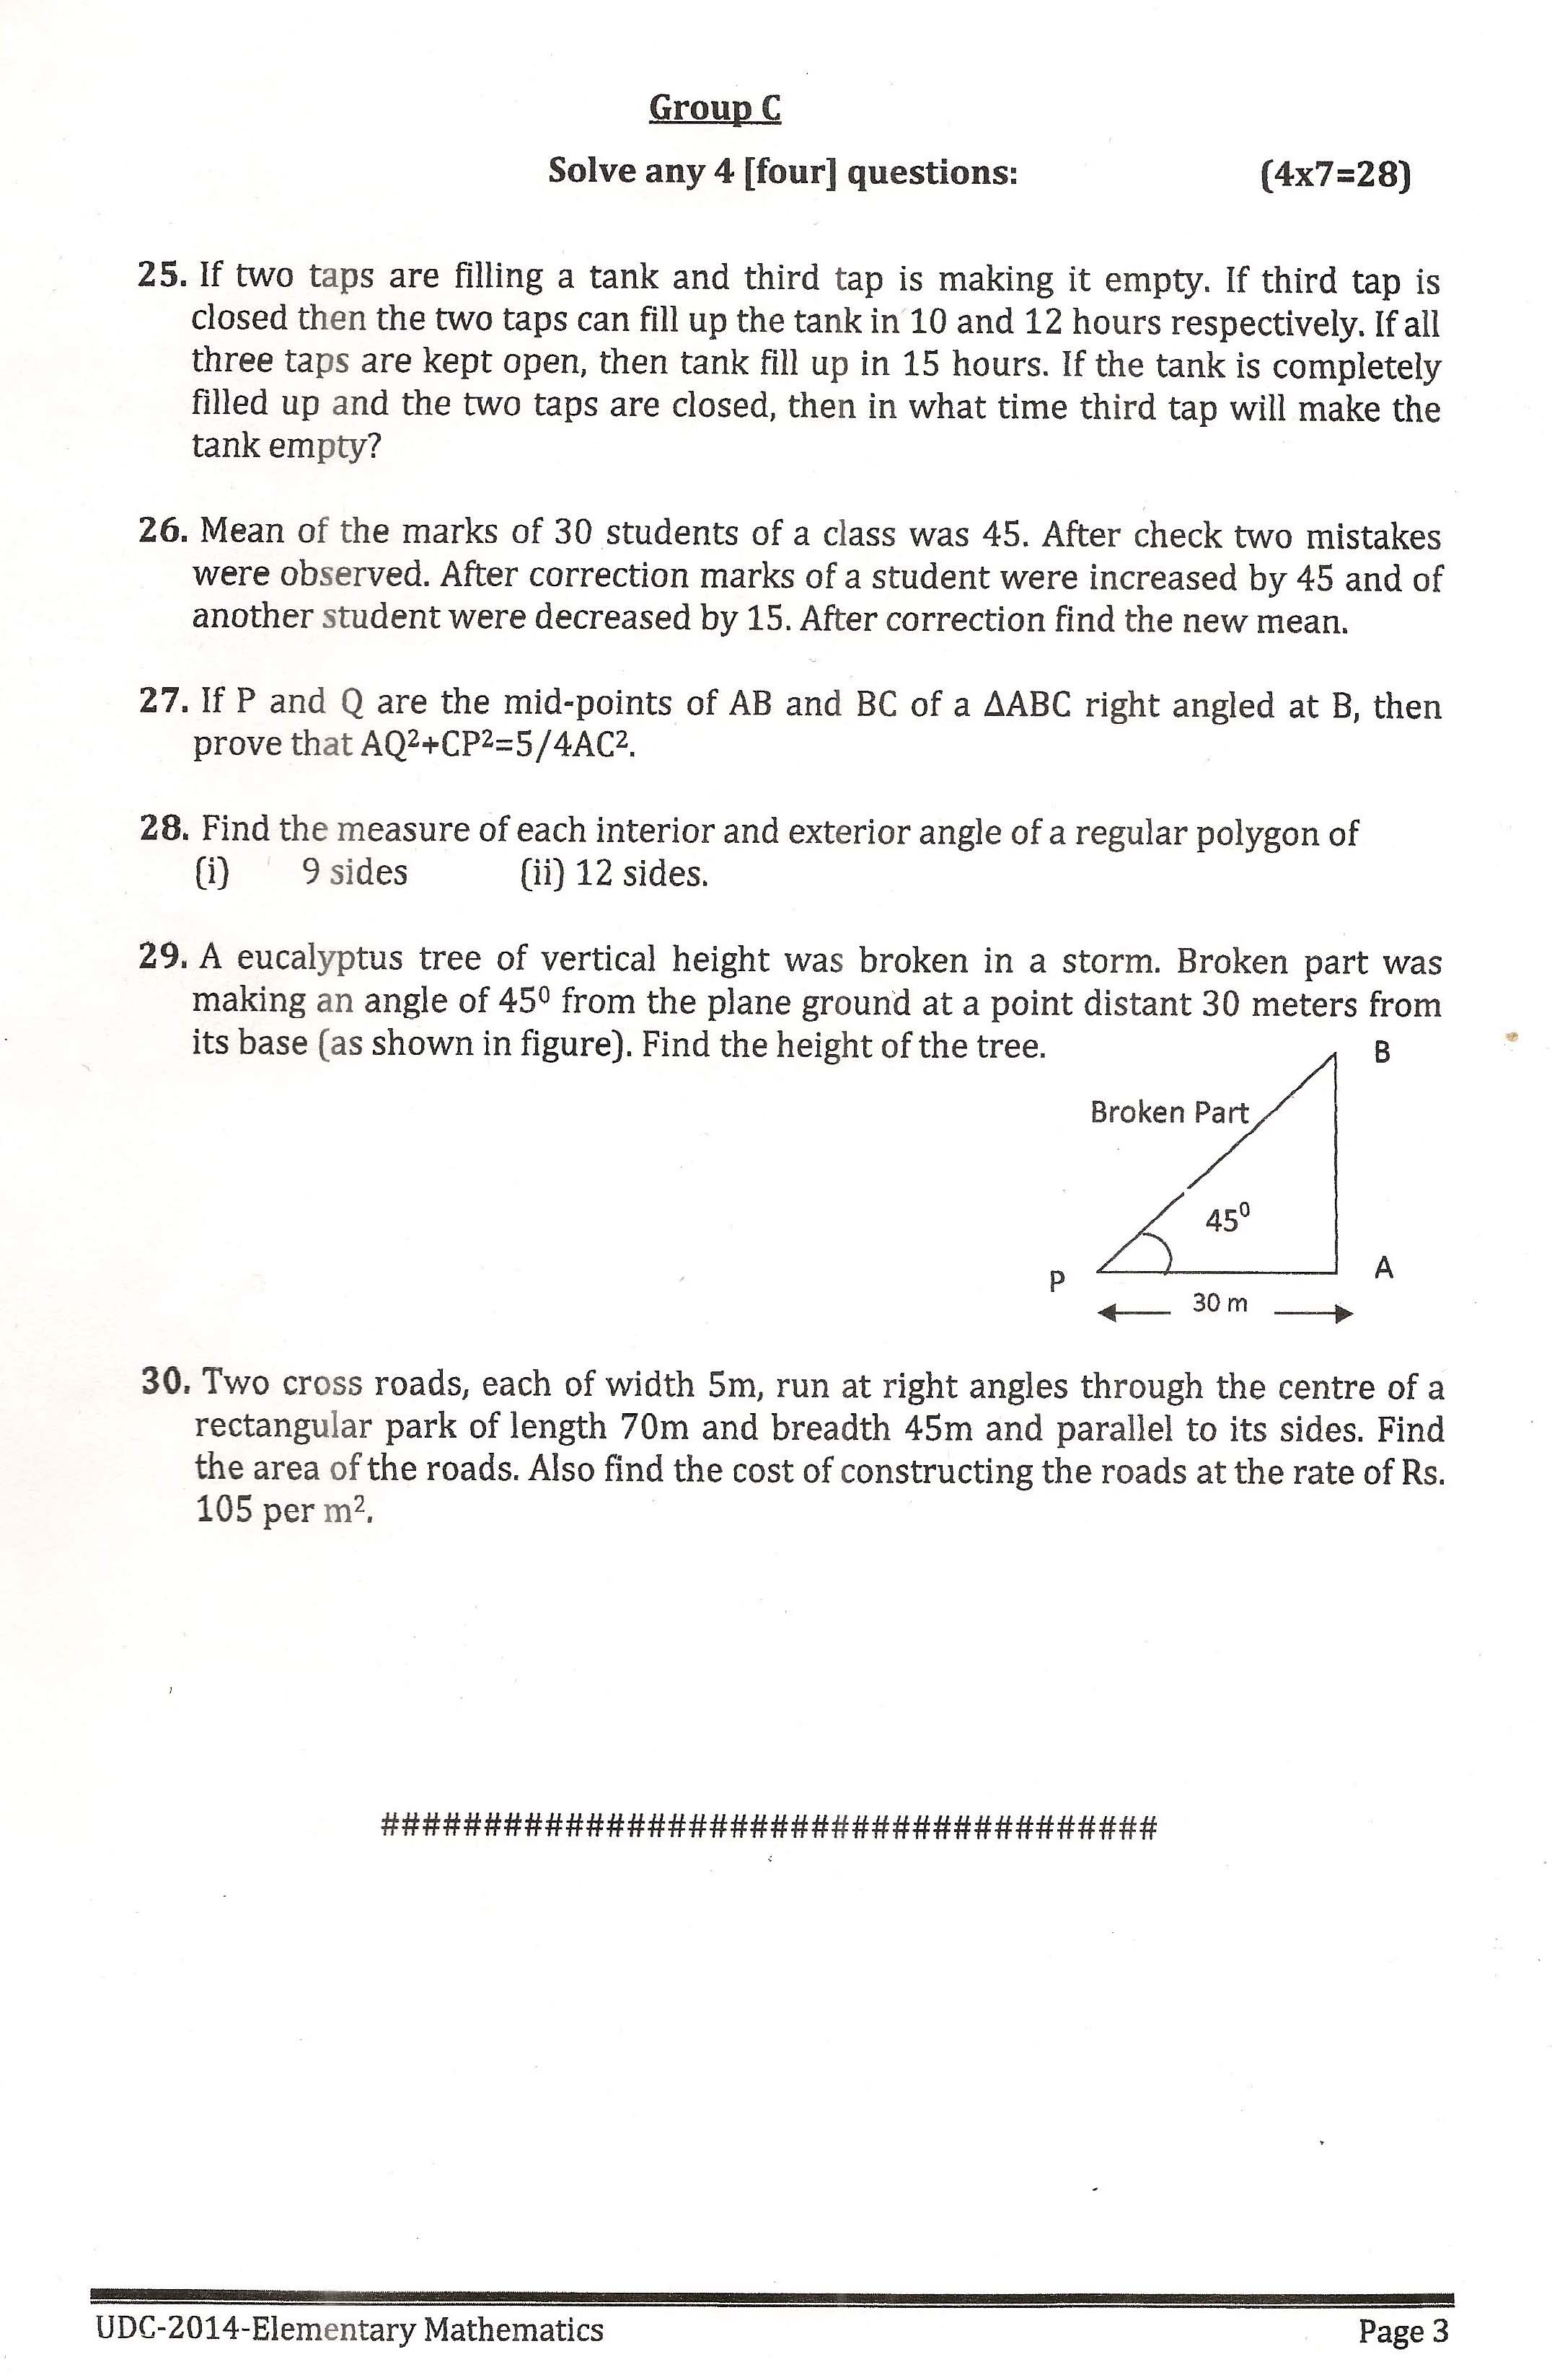 APPSC Upper Division Clerk Mathematics Exam Question Paper 2014 3